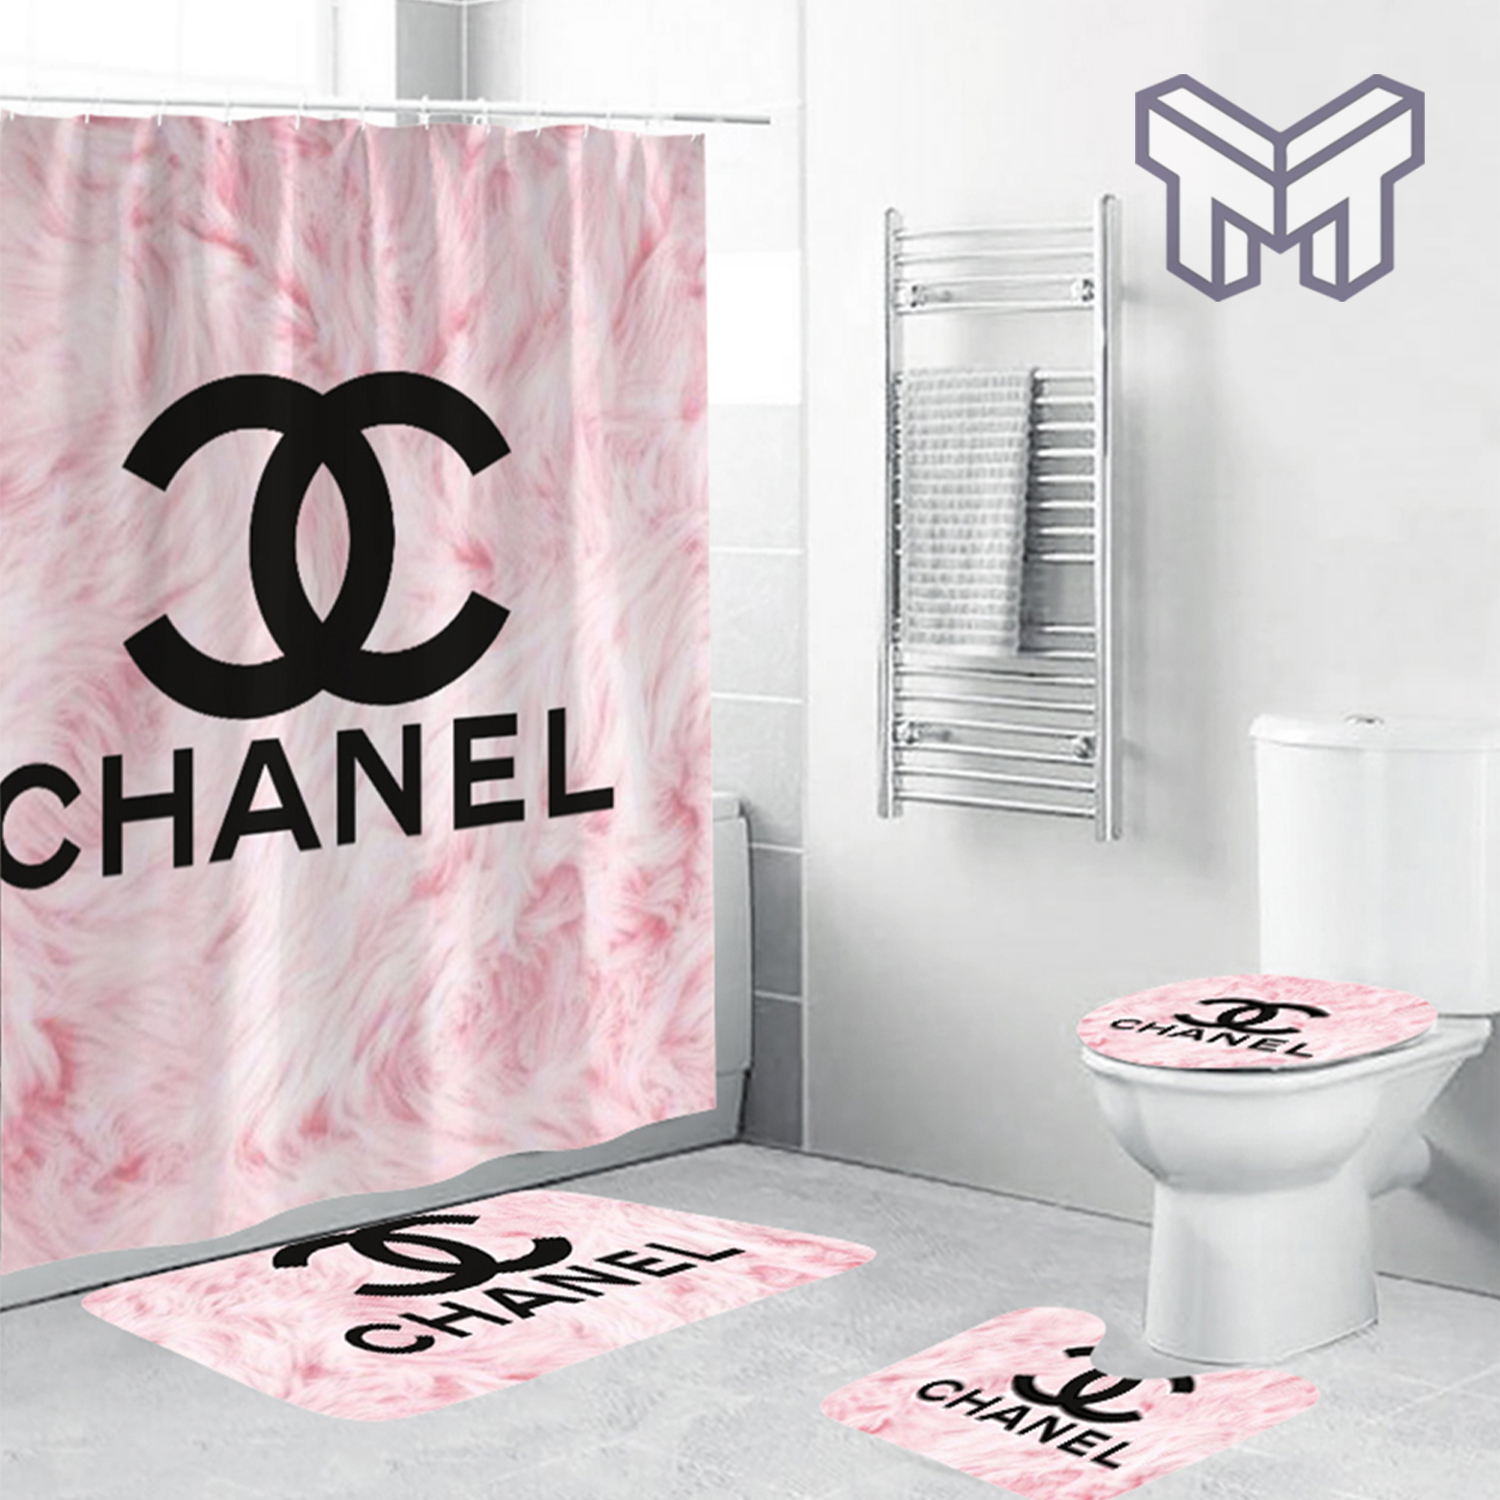 Chanel Pinky Fashion Luxury Brand Bathroom Set Home Decor Shower